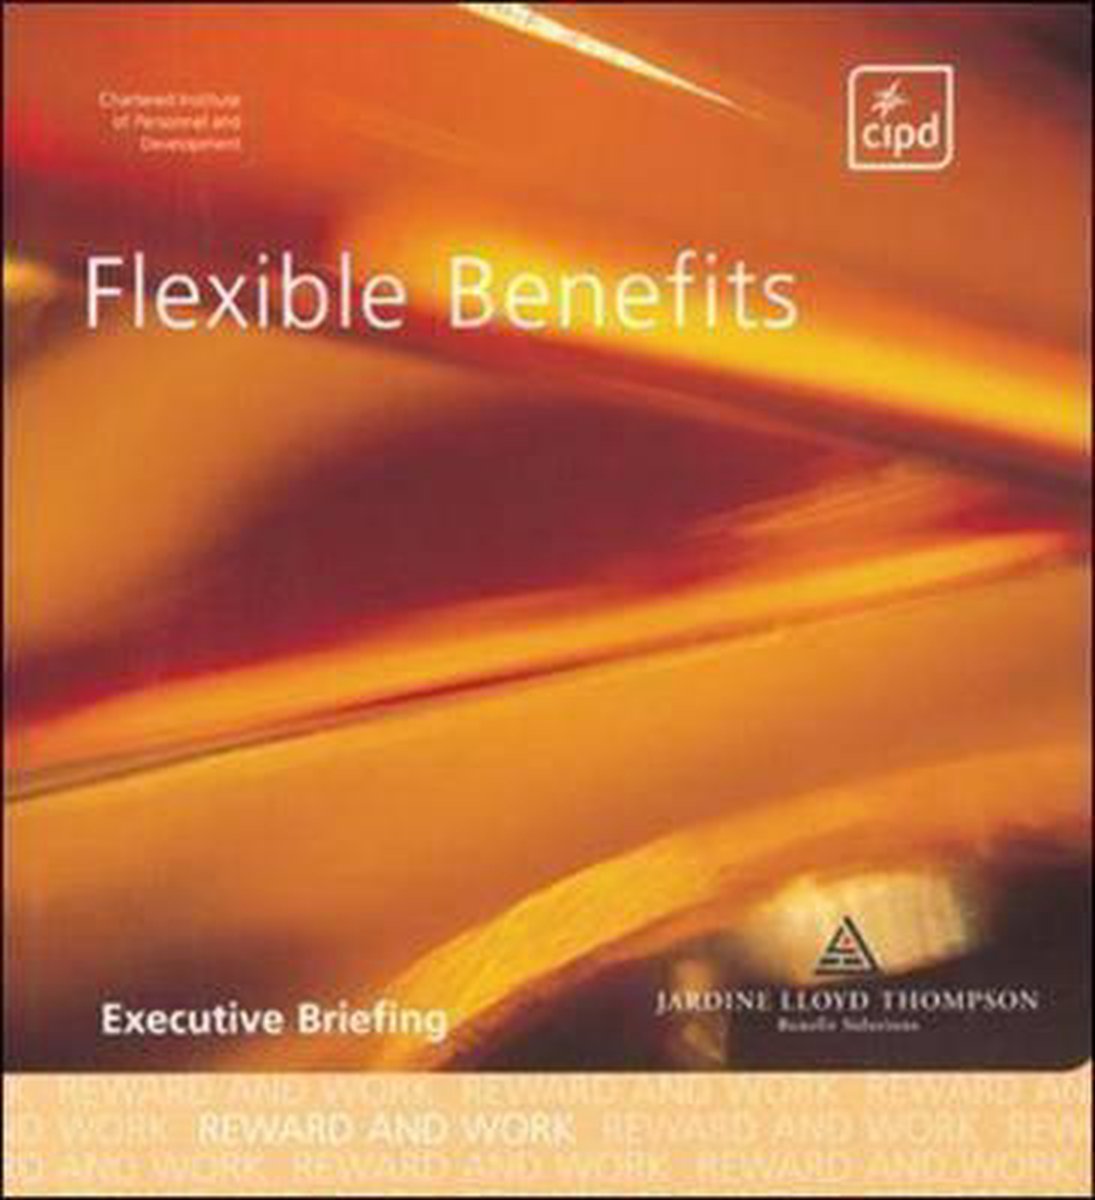 Flexible Benefits - The Cipd